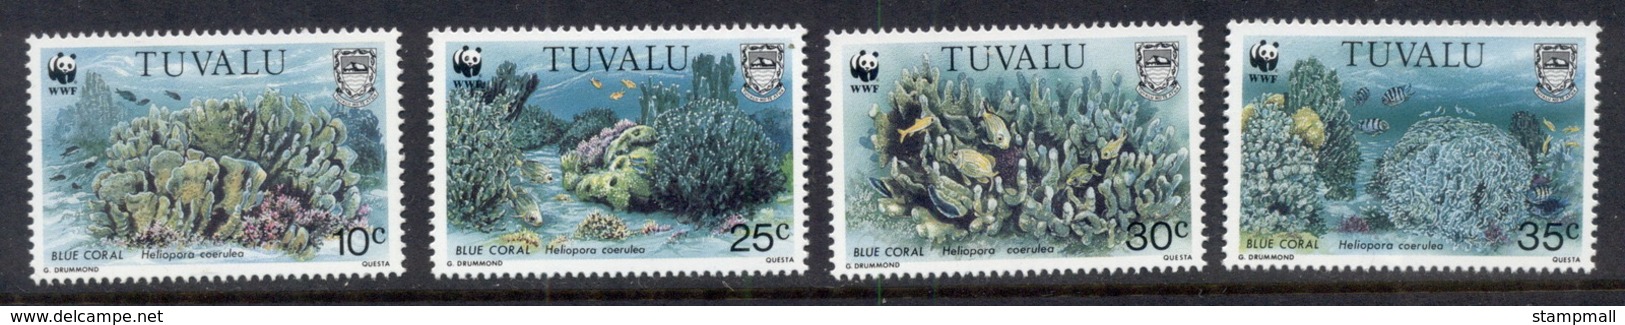 Tuvalu 1992 WWF Blue Coral MUH - Tuvalu